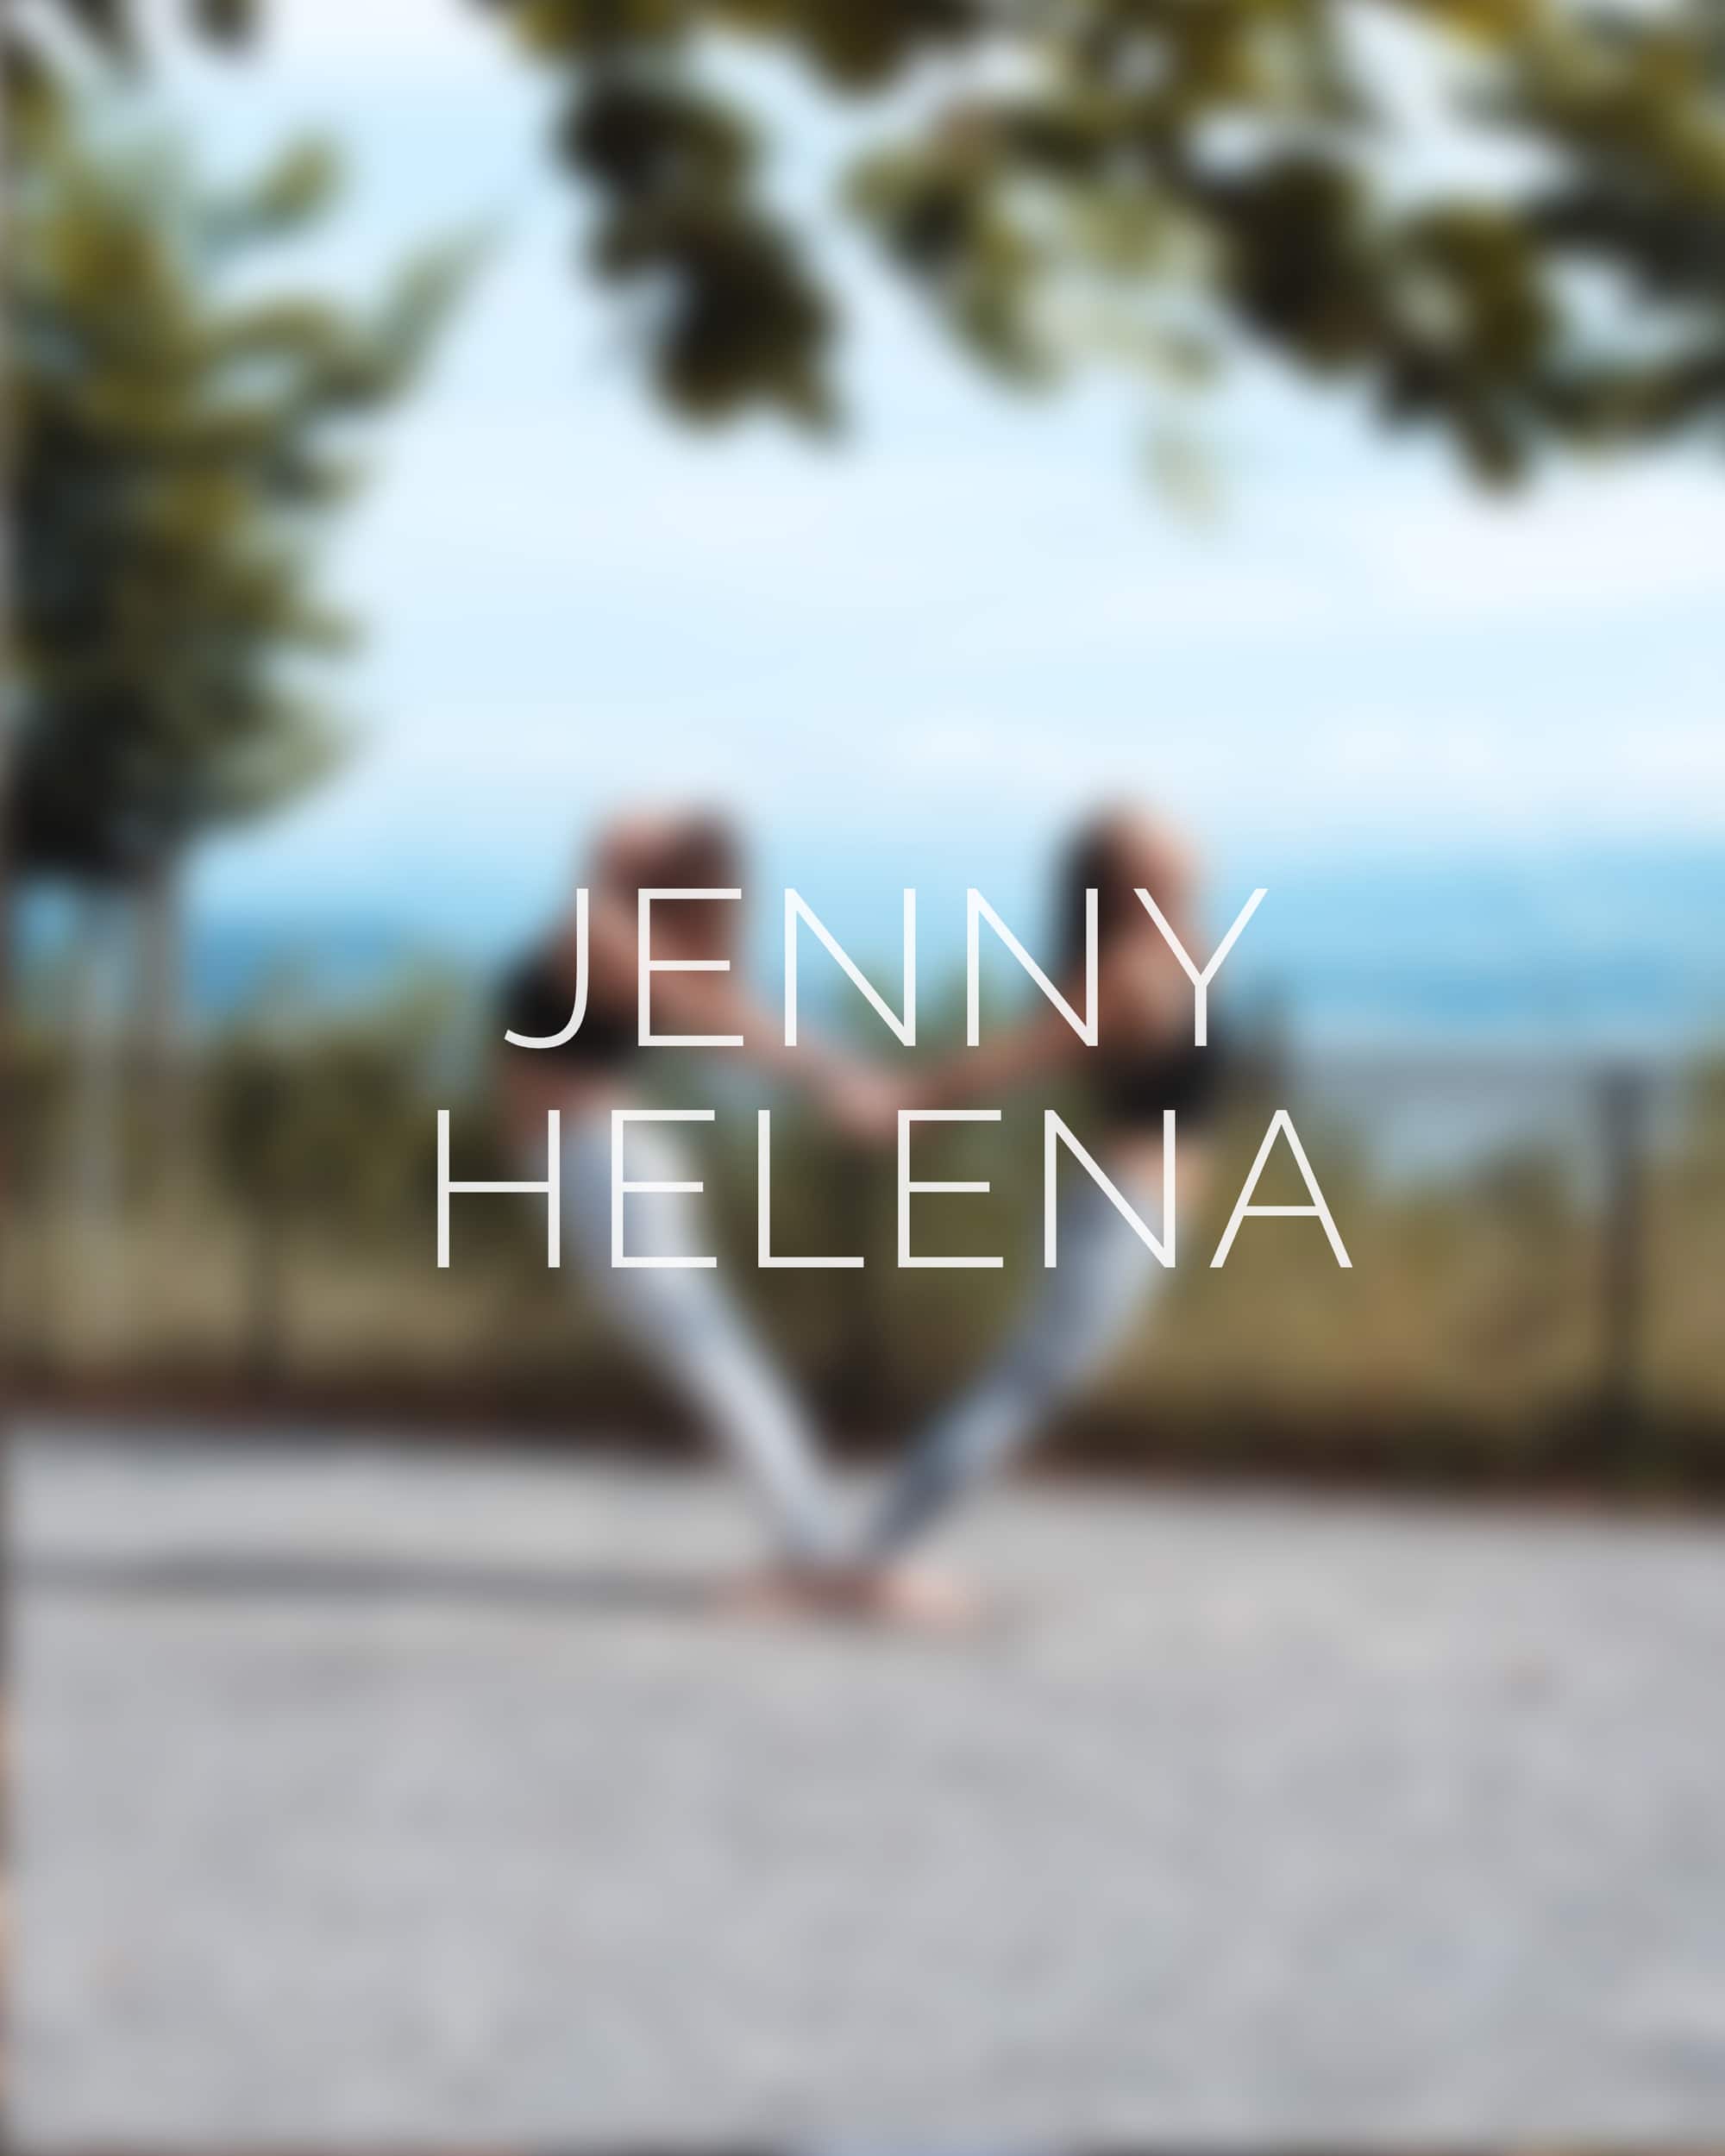 Shooting Jenny und Helena